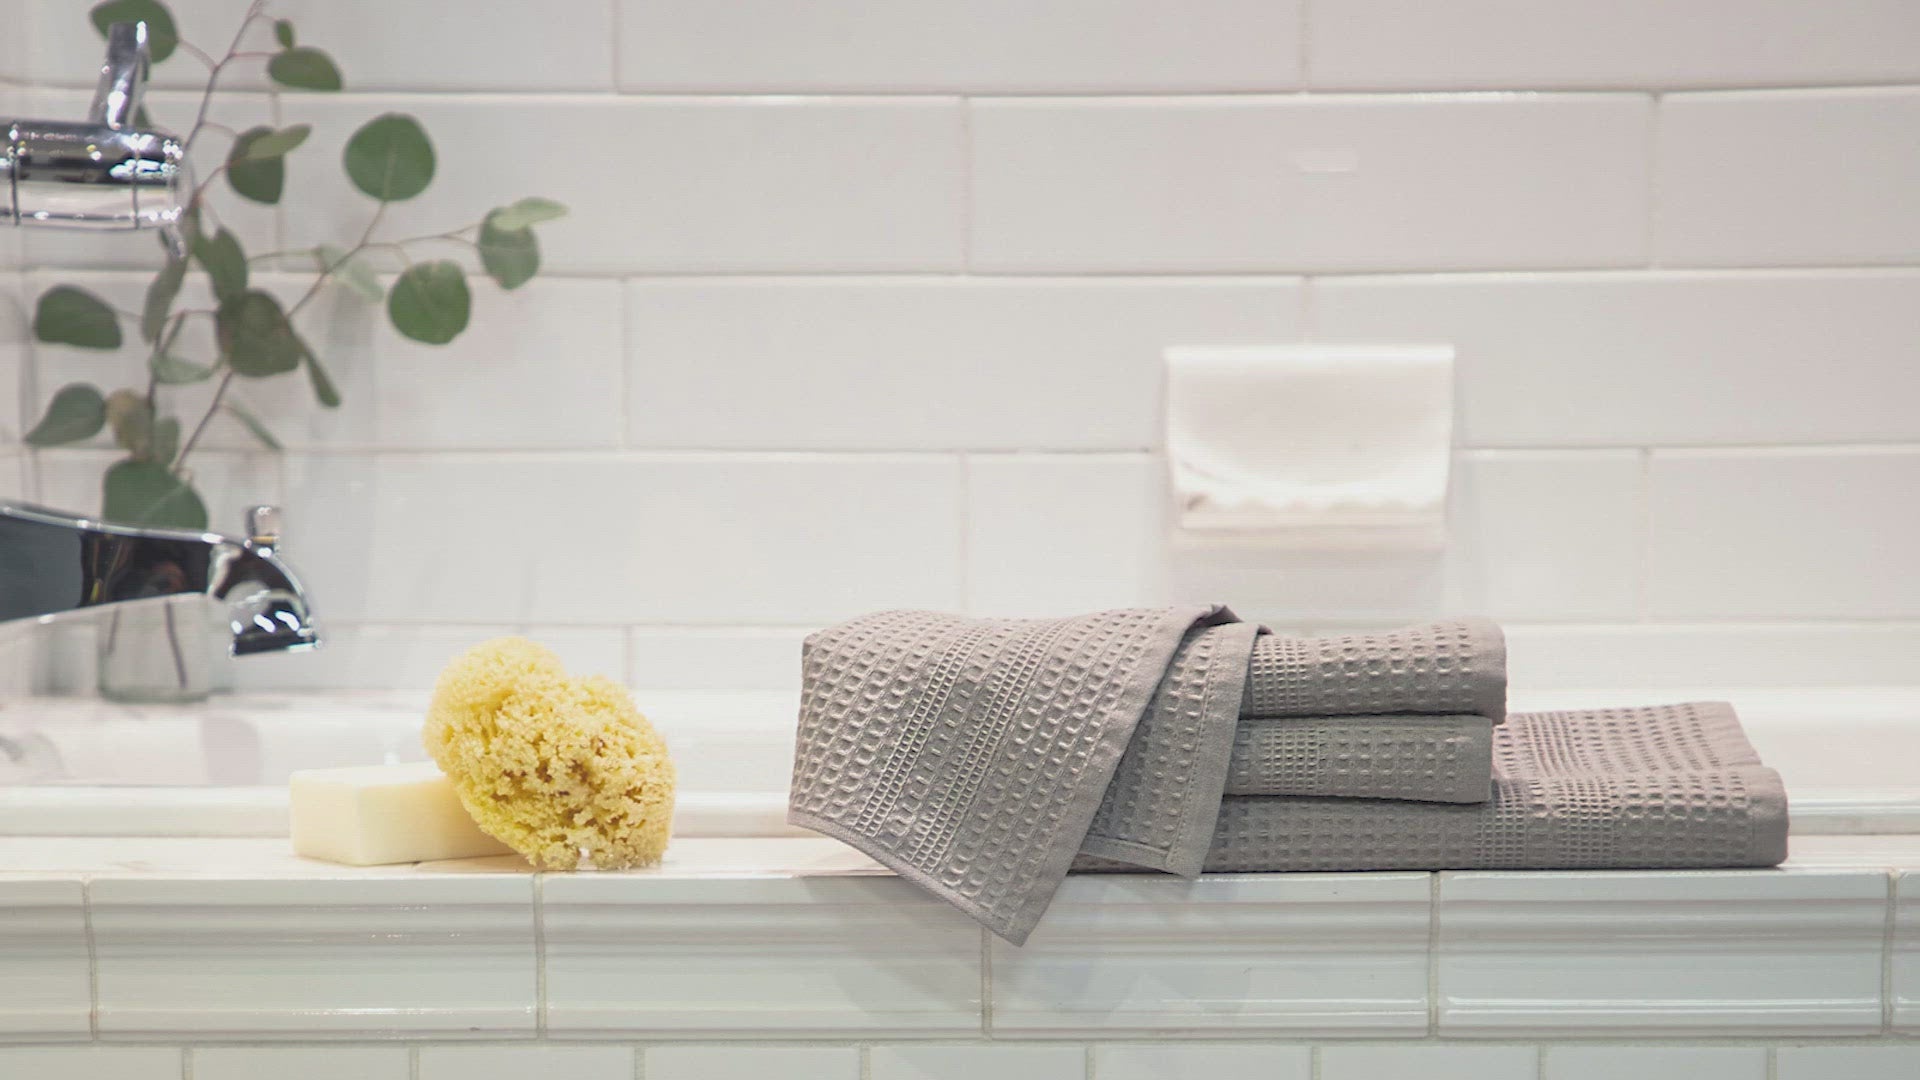 Gilden Tree | Waffle Bath Towels | Stone Wash Cloth